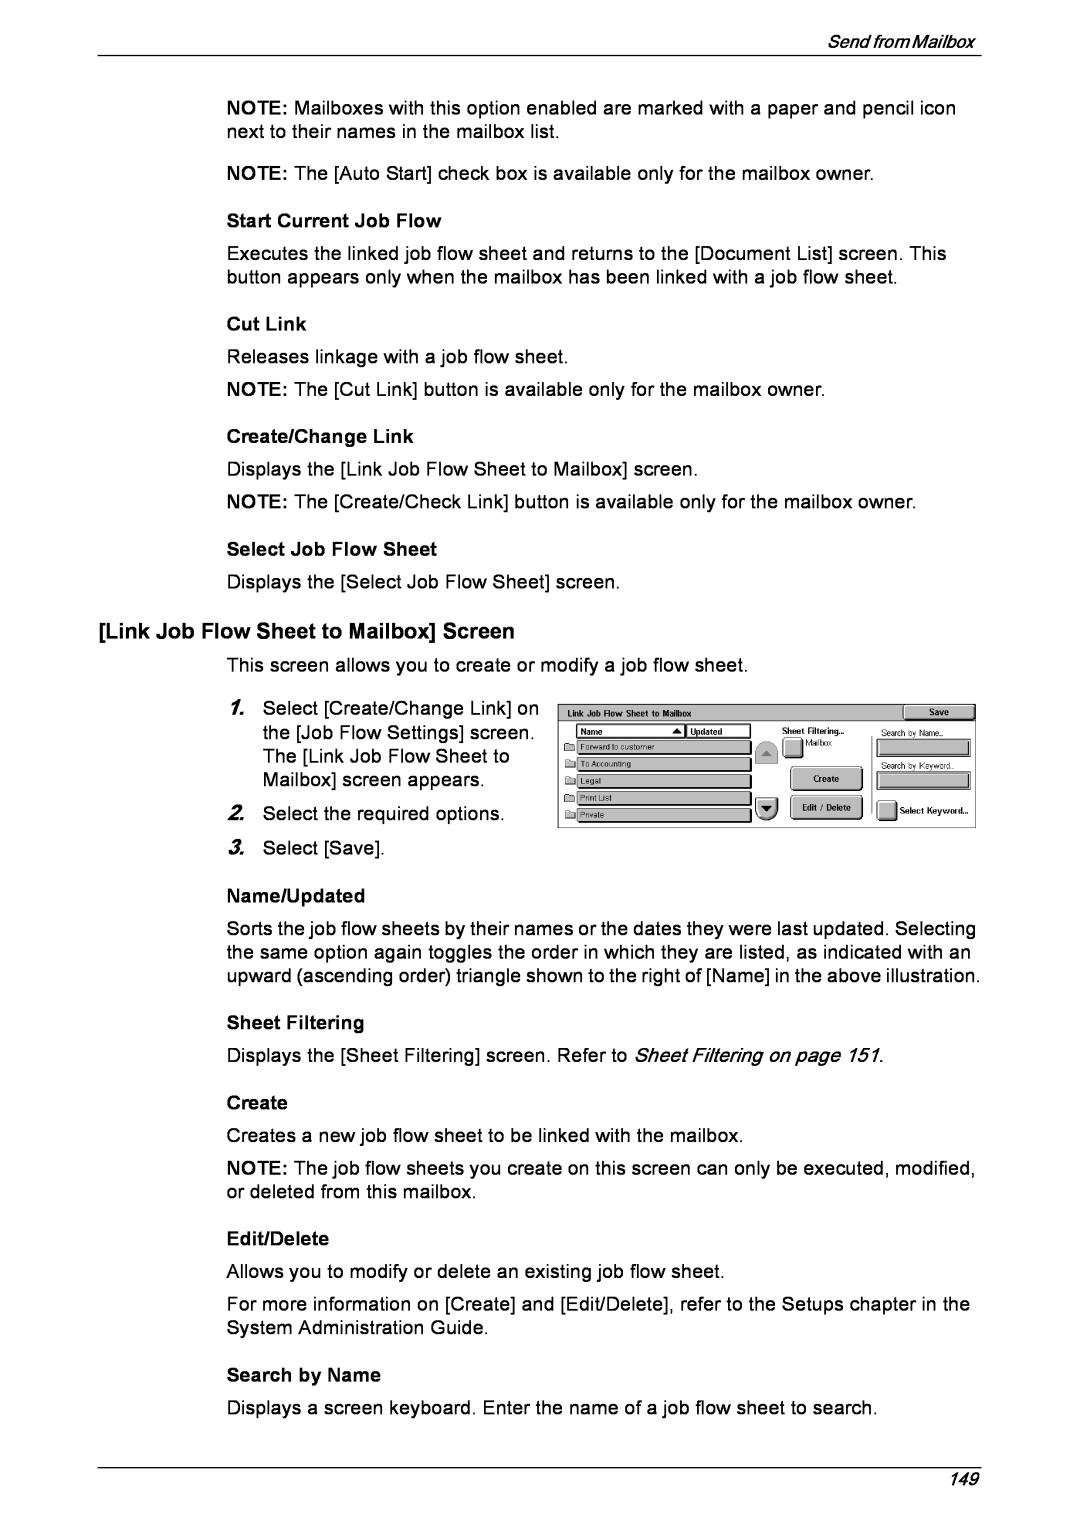 Xerox 5230 manual Link Job Flow Sheet to Mailbox Screen, Start Current Job Flow, Cut Link, Create/Change Link, Name/Updated 